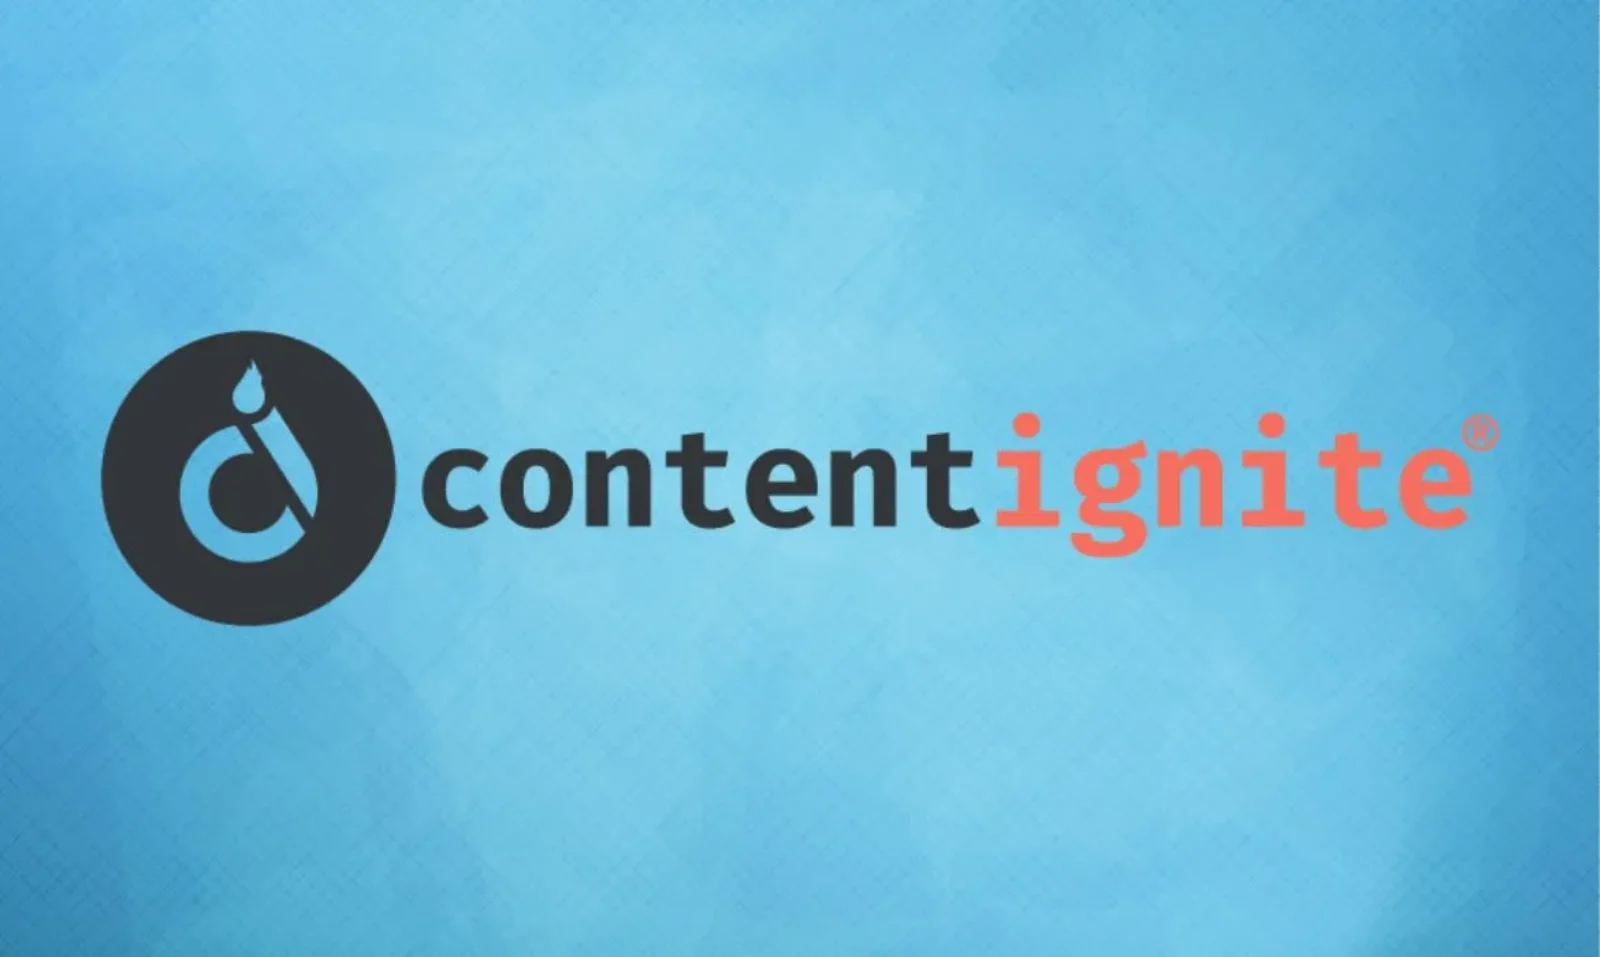 Content Ignite, ContentIgnite, Ads.txt, Ads.txt Tool, Publisher Tools, Ad Revenue, Digital Advertising, Ad Fraud Prevention,